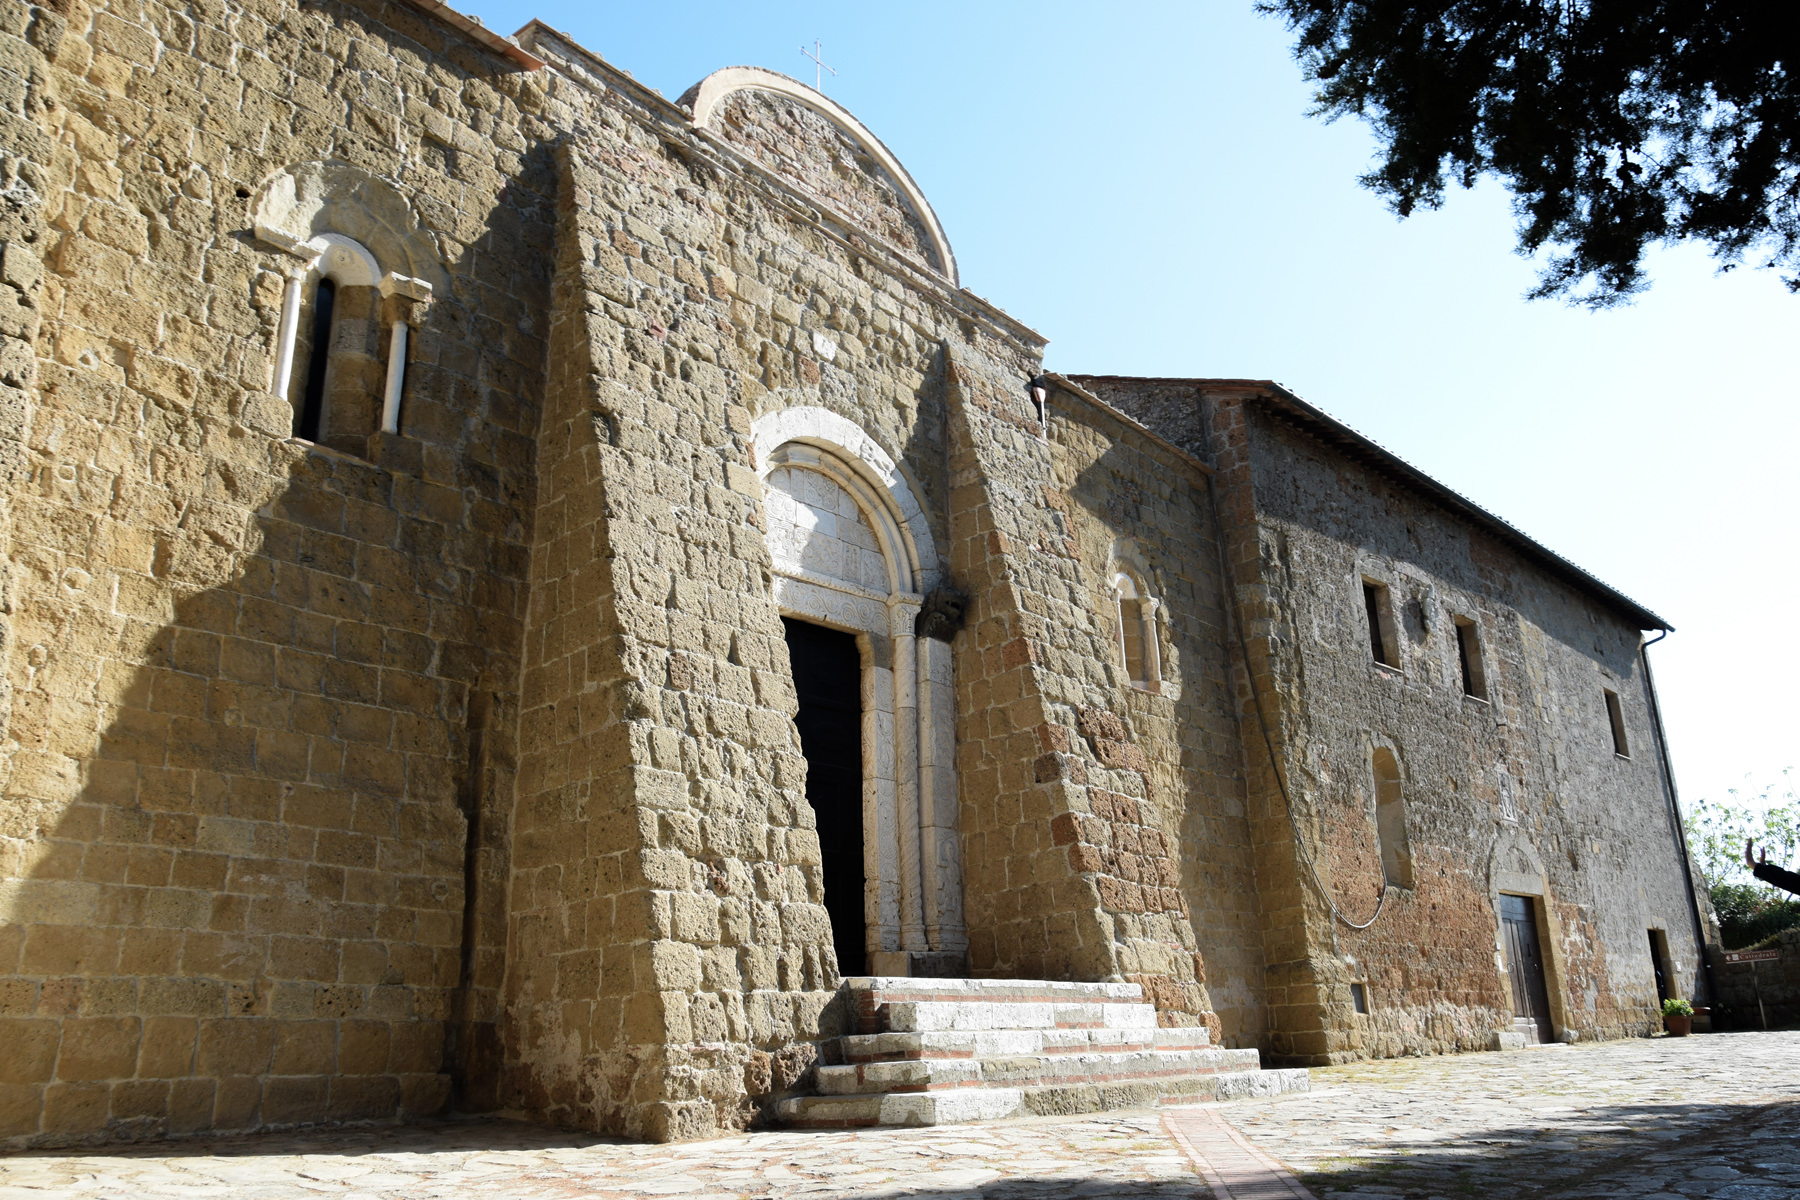 Cathédrale de Sovana, façade